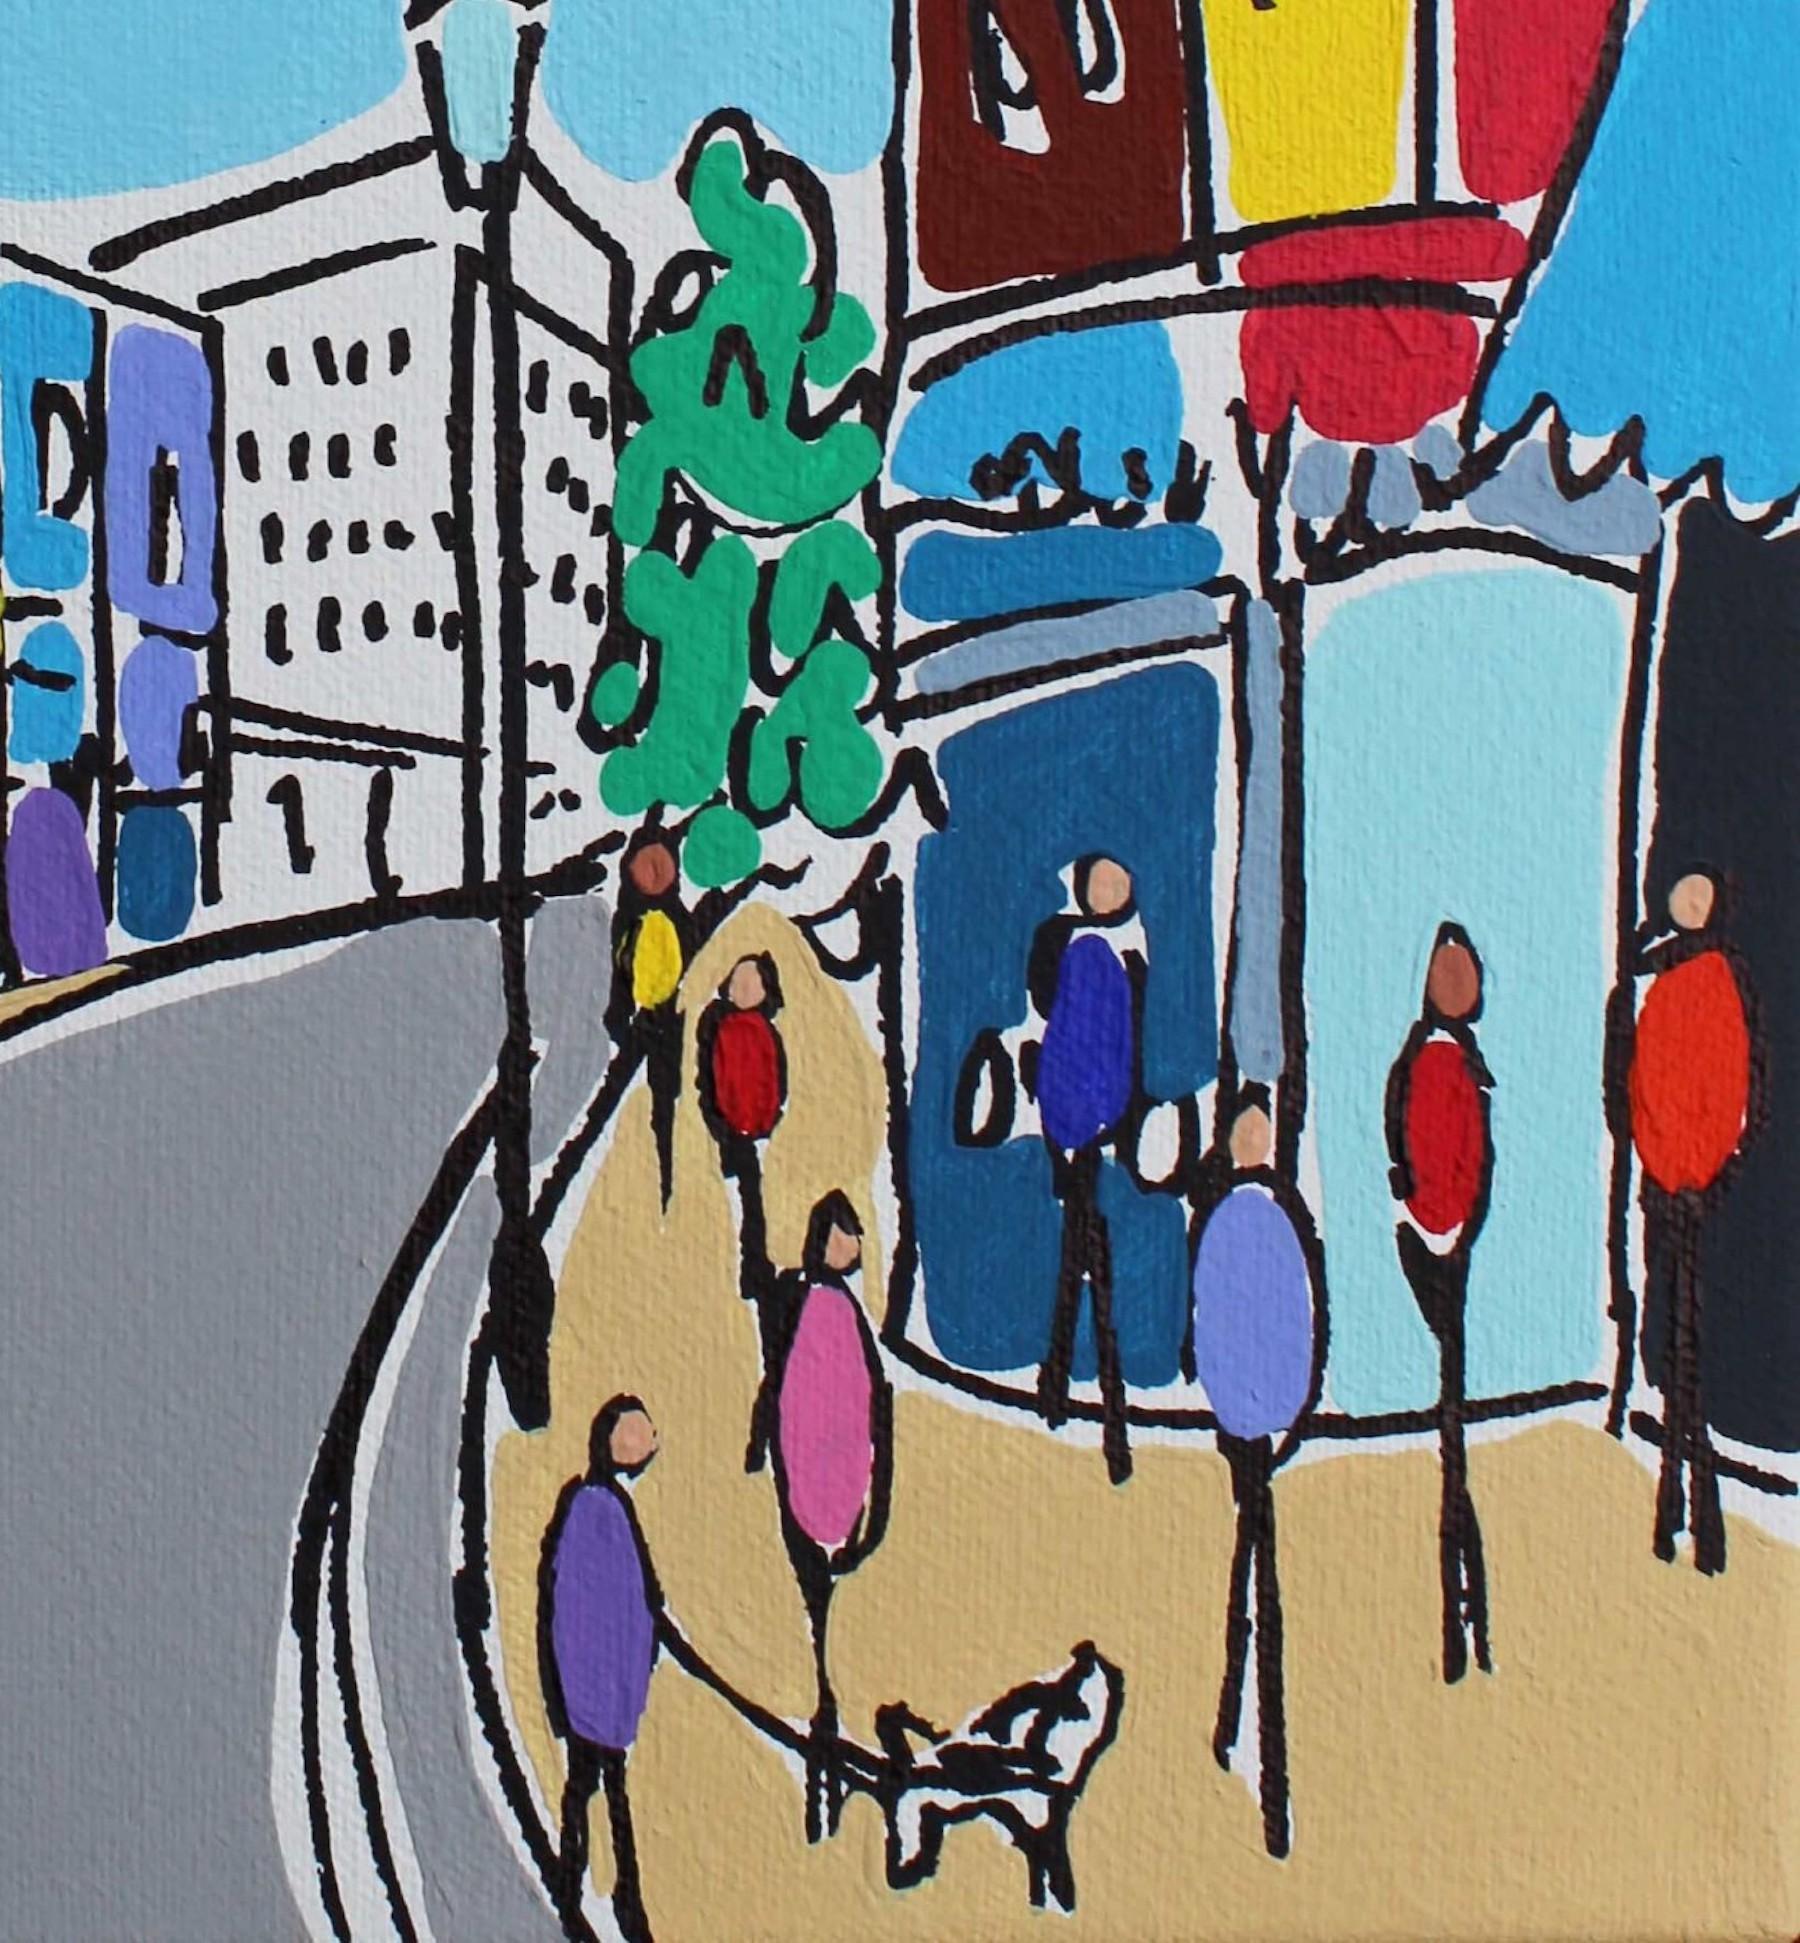 Mini Colours of Portobello, London Cityscape Art, Illustrative Painting For Sale 2